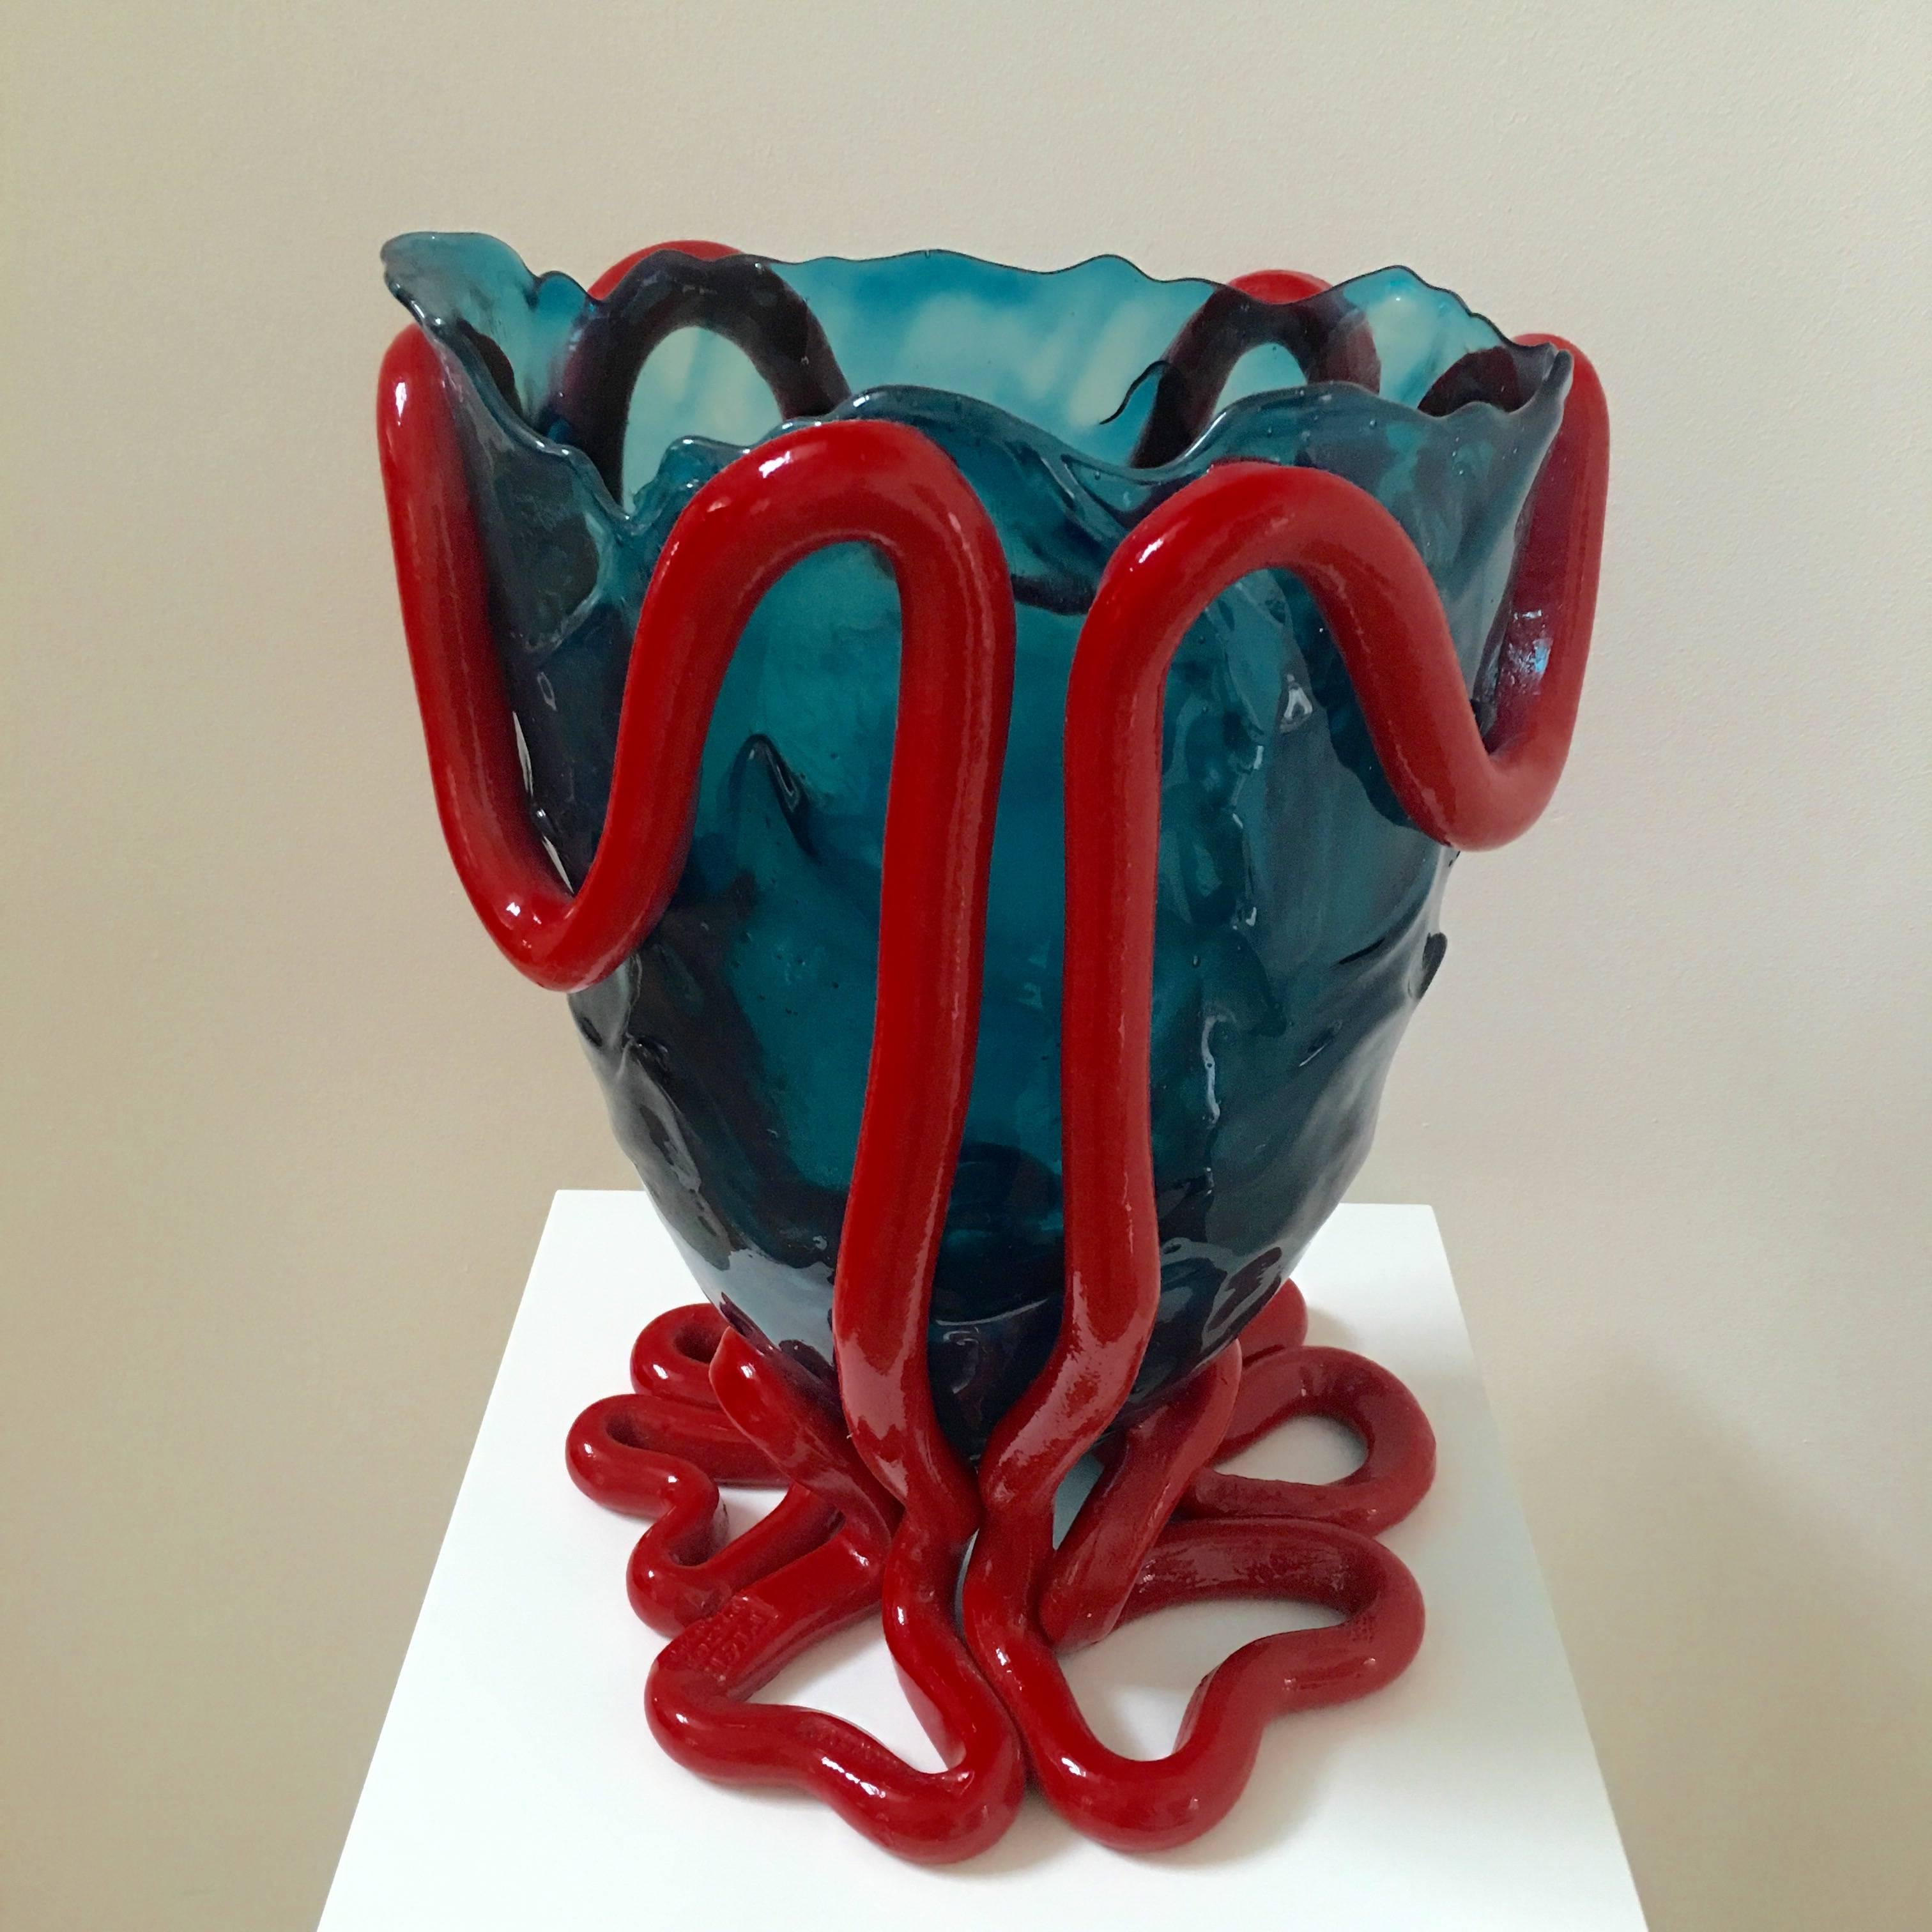 Modern Gaetano Pesce Sculpture Vase - I